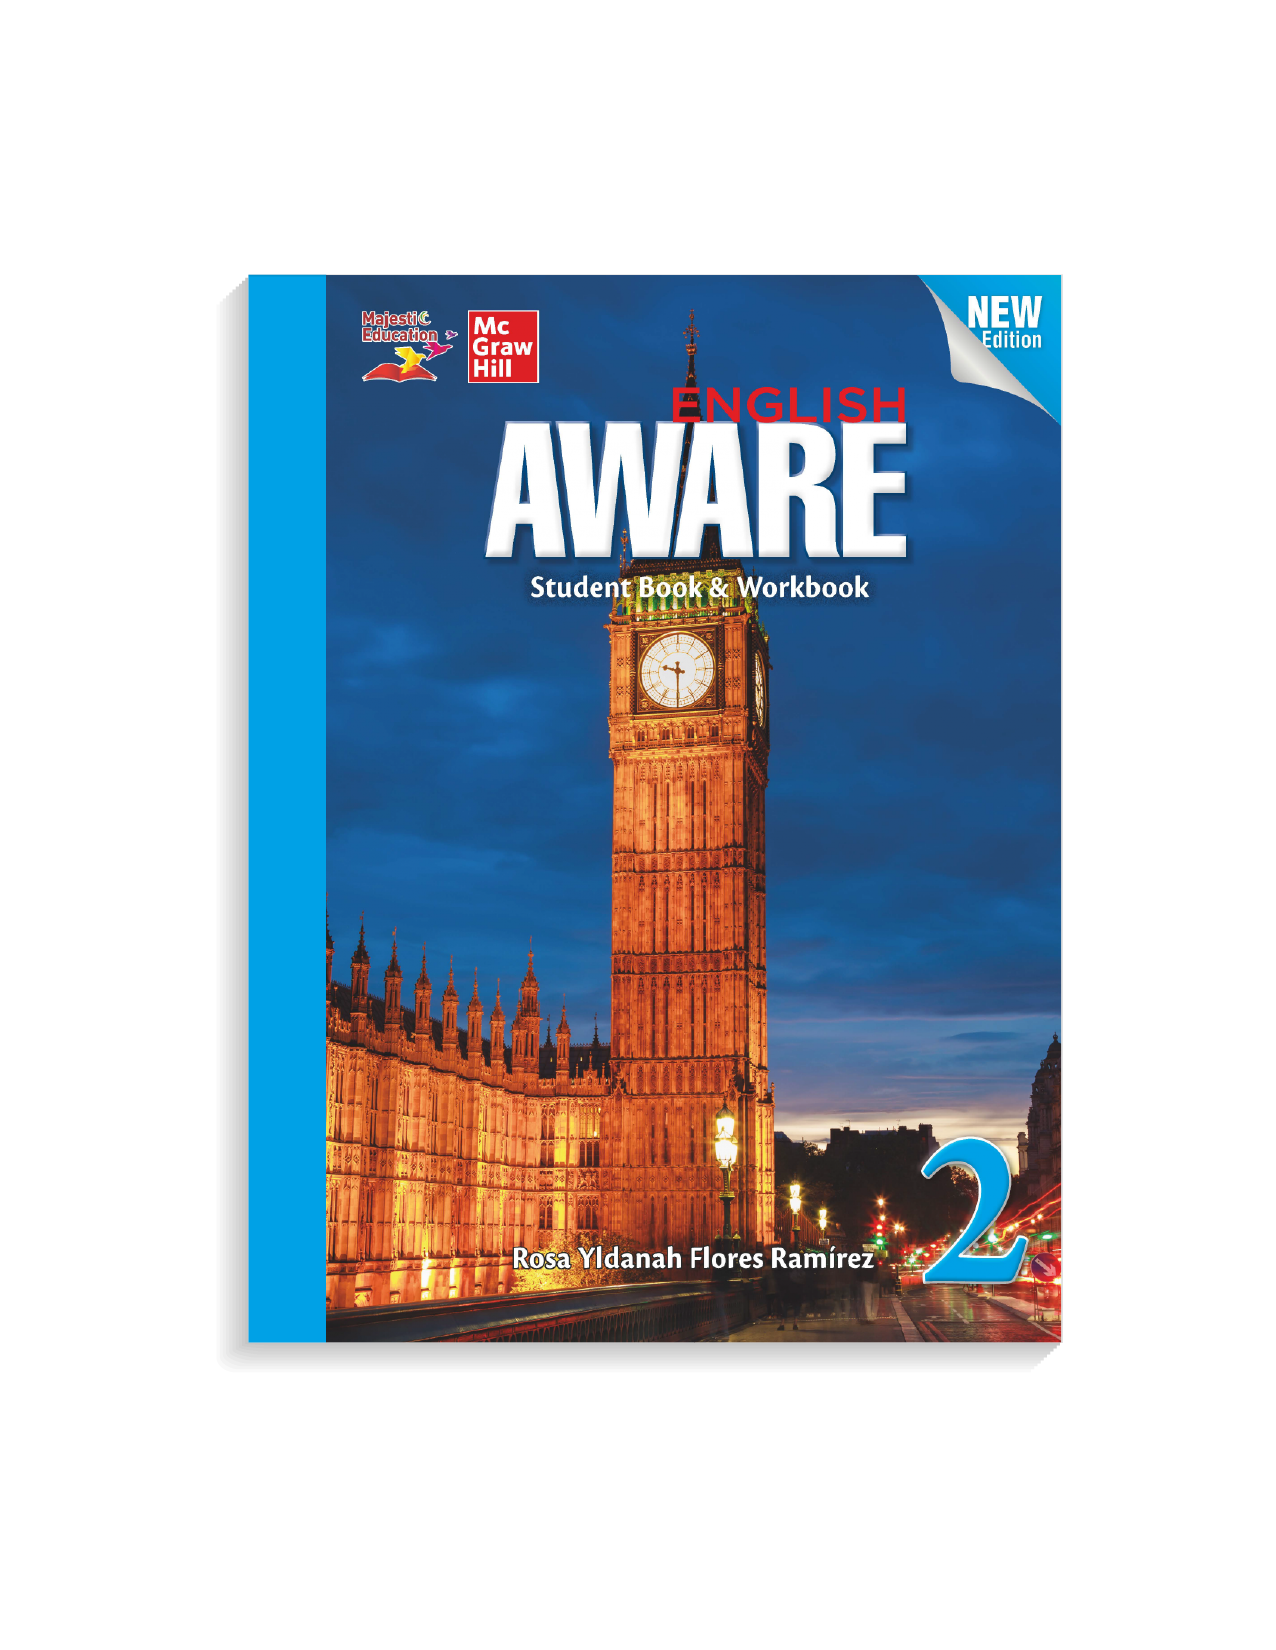 Aware and Protection: A Guide (English Edition) - eBooks em Inglês